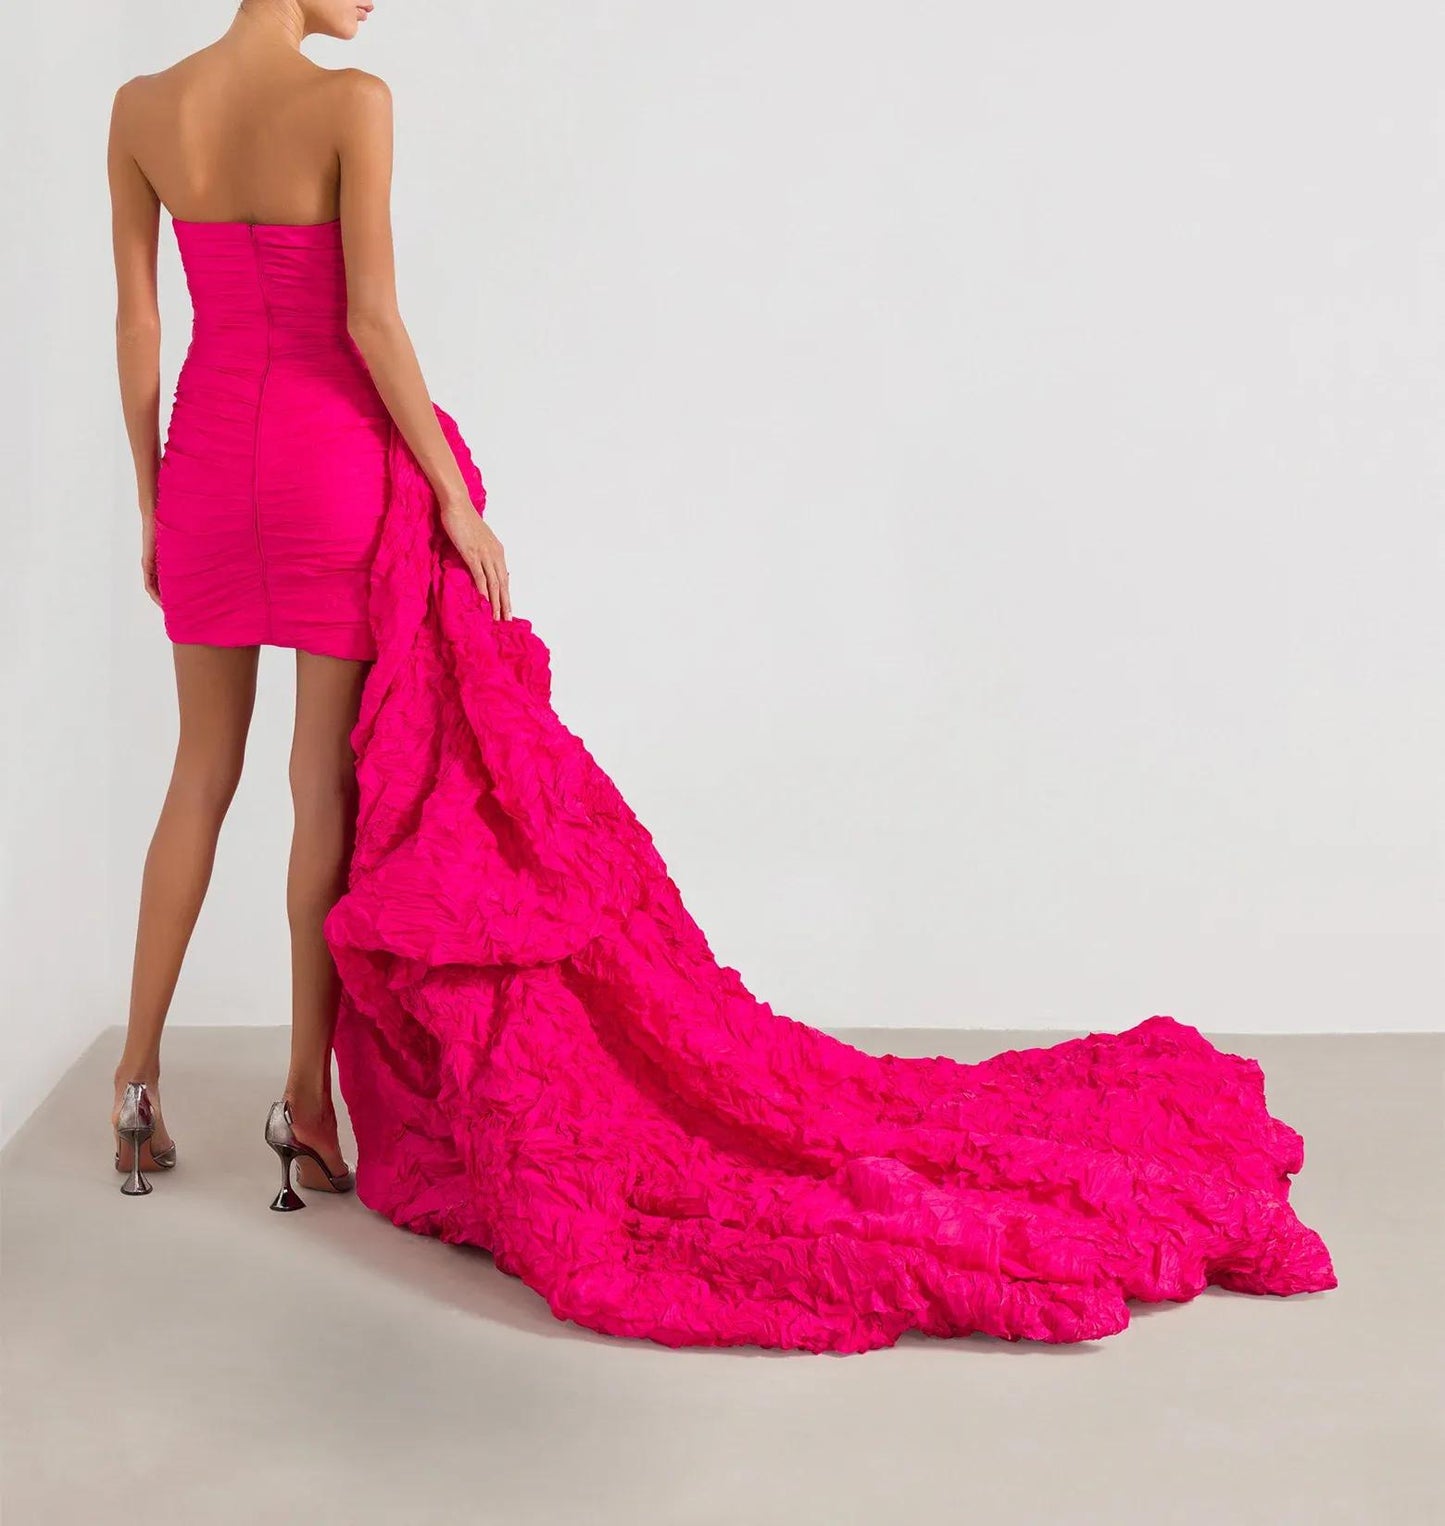 Crushed Taffeta Couture Dress